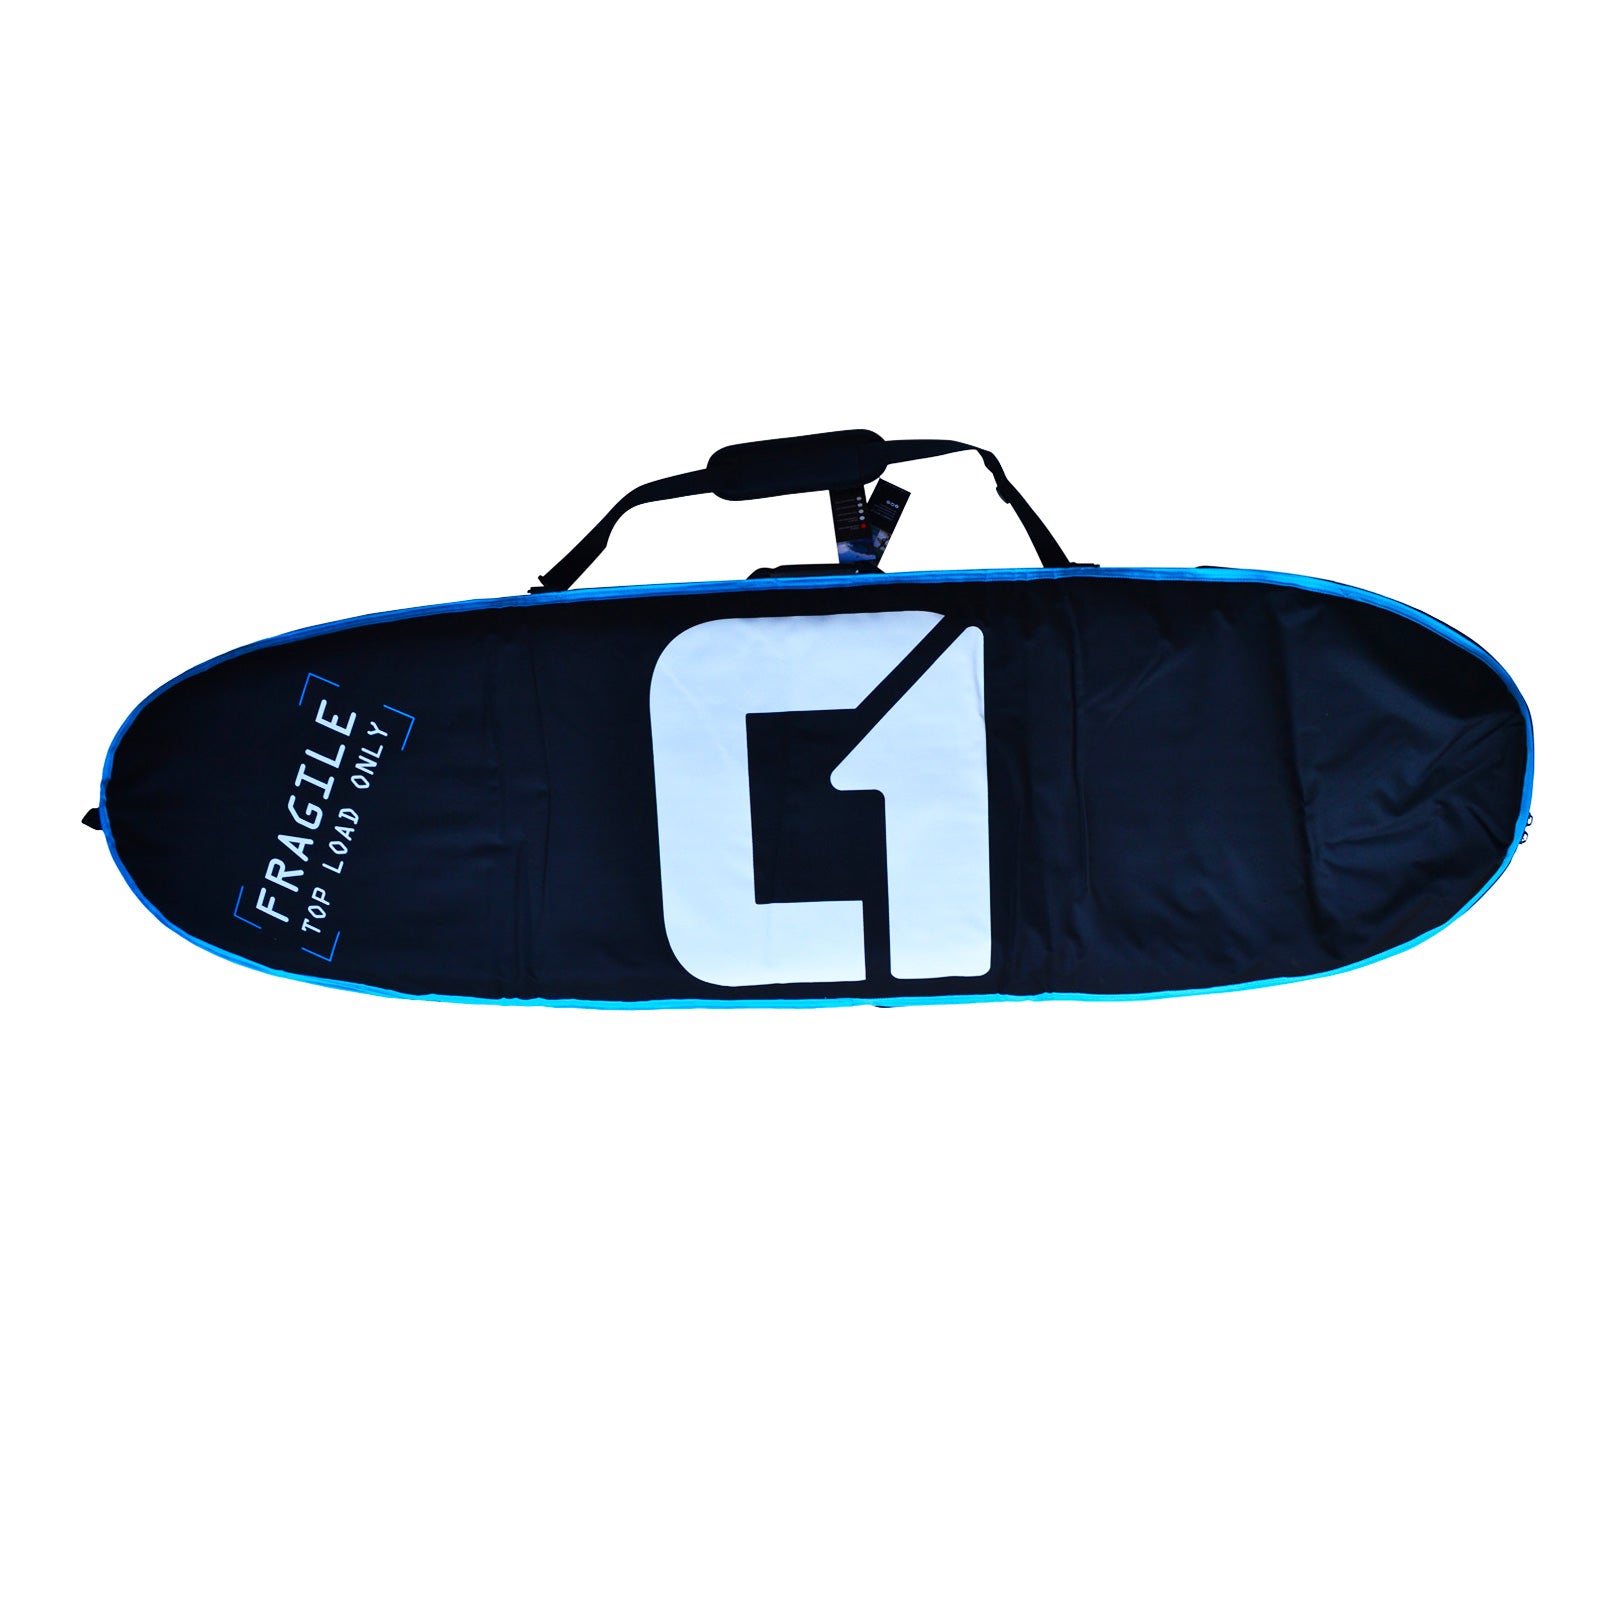 8ft Razor Mini Mal Surfboard Matt Finish Package – Includes Bag, Fins, Wax & Leash | Funky Town Shop